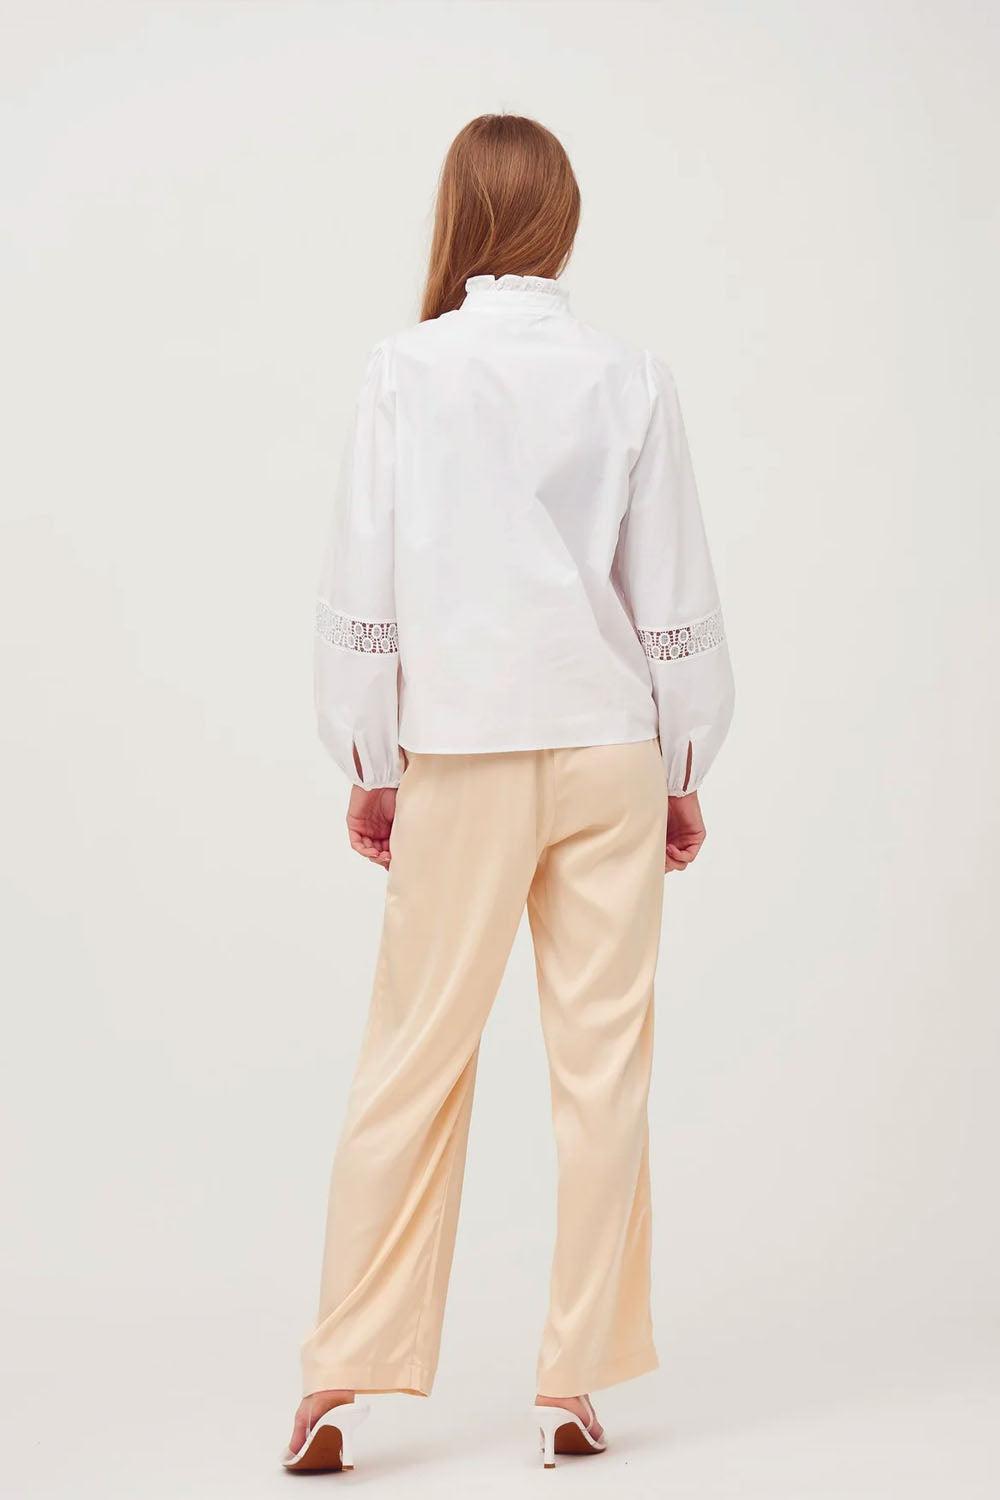 Tiffany Shirt White